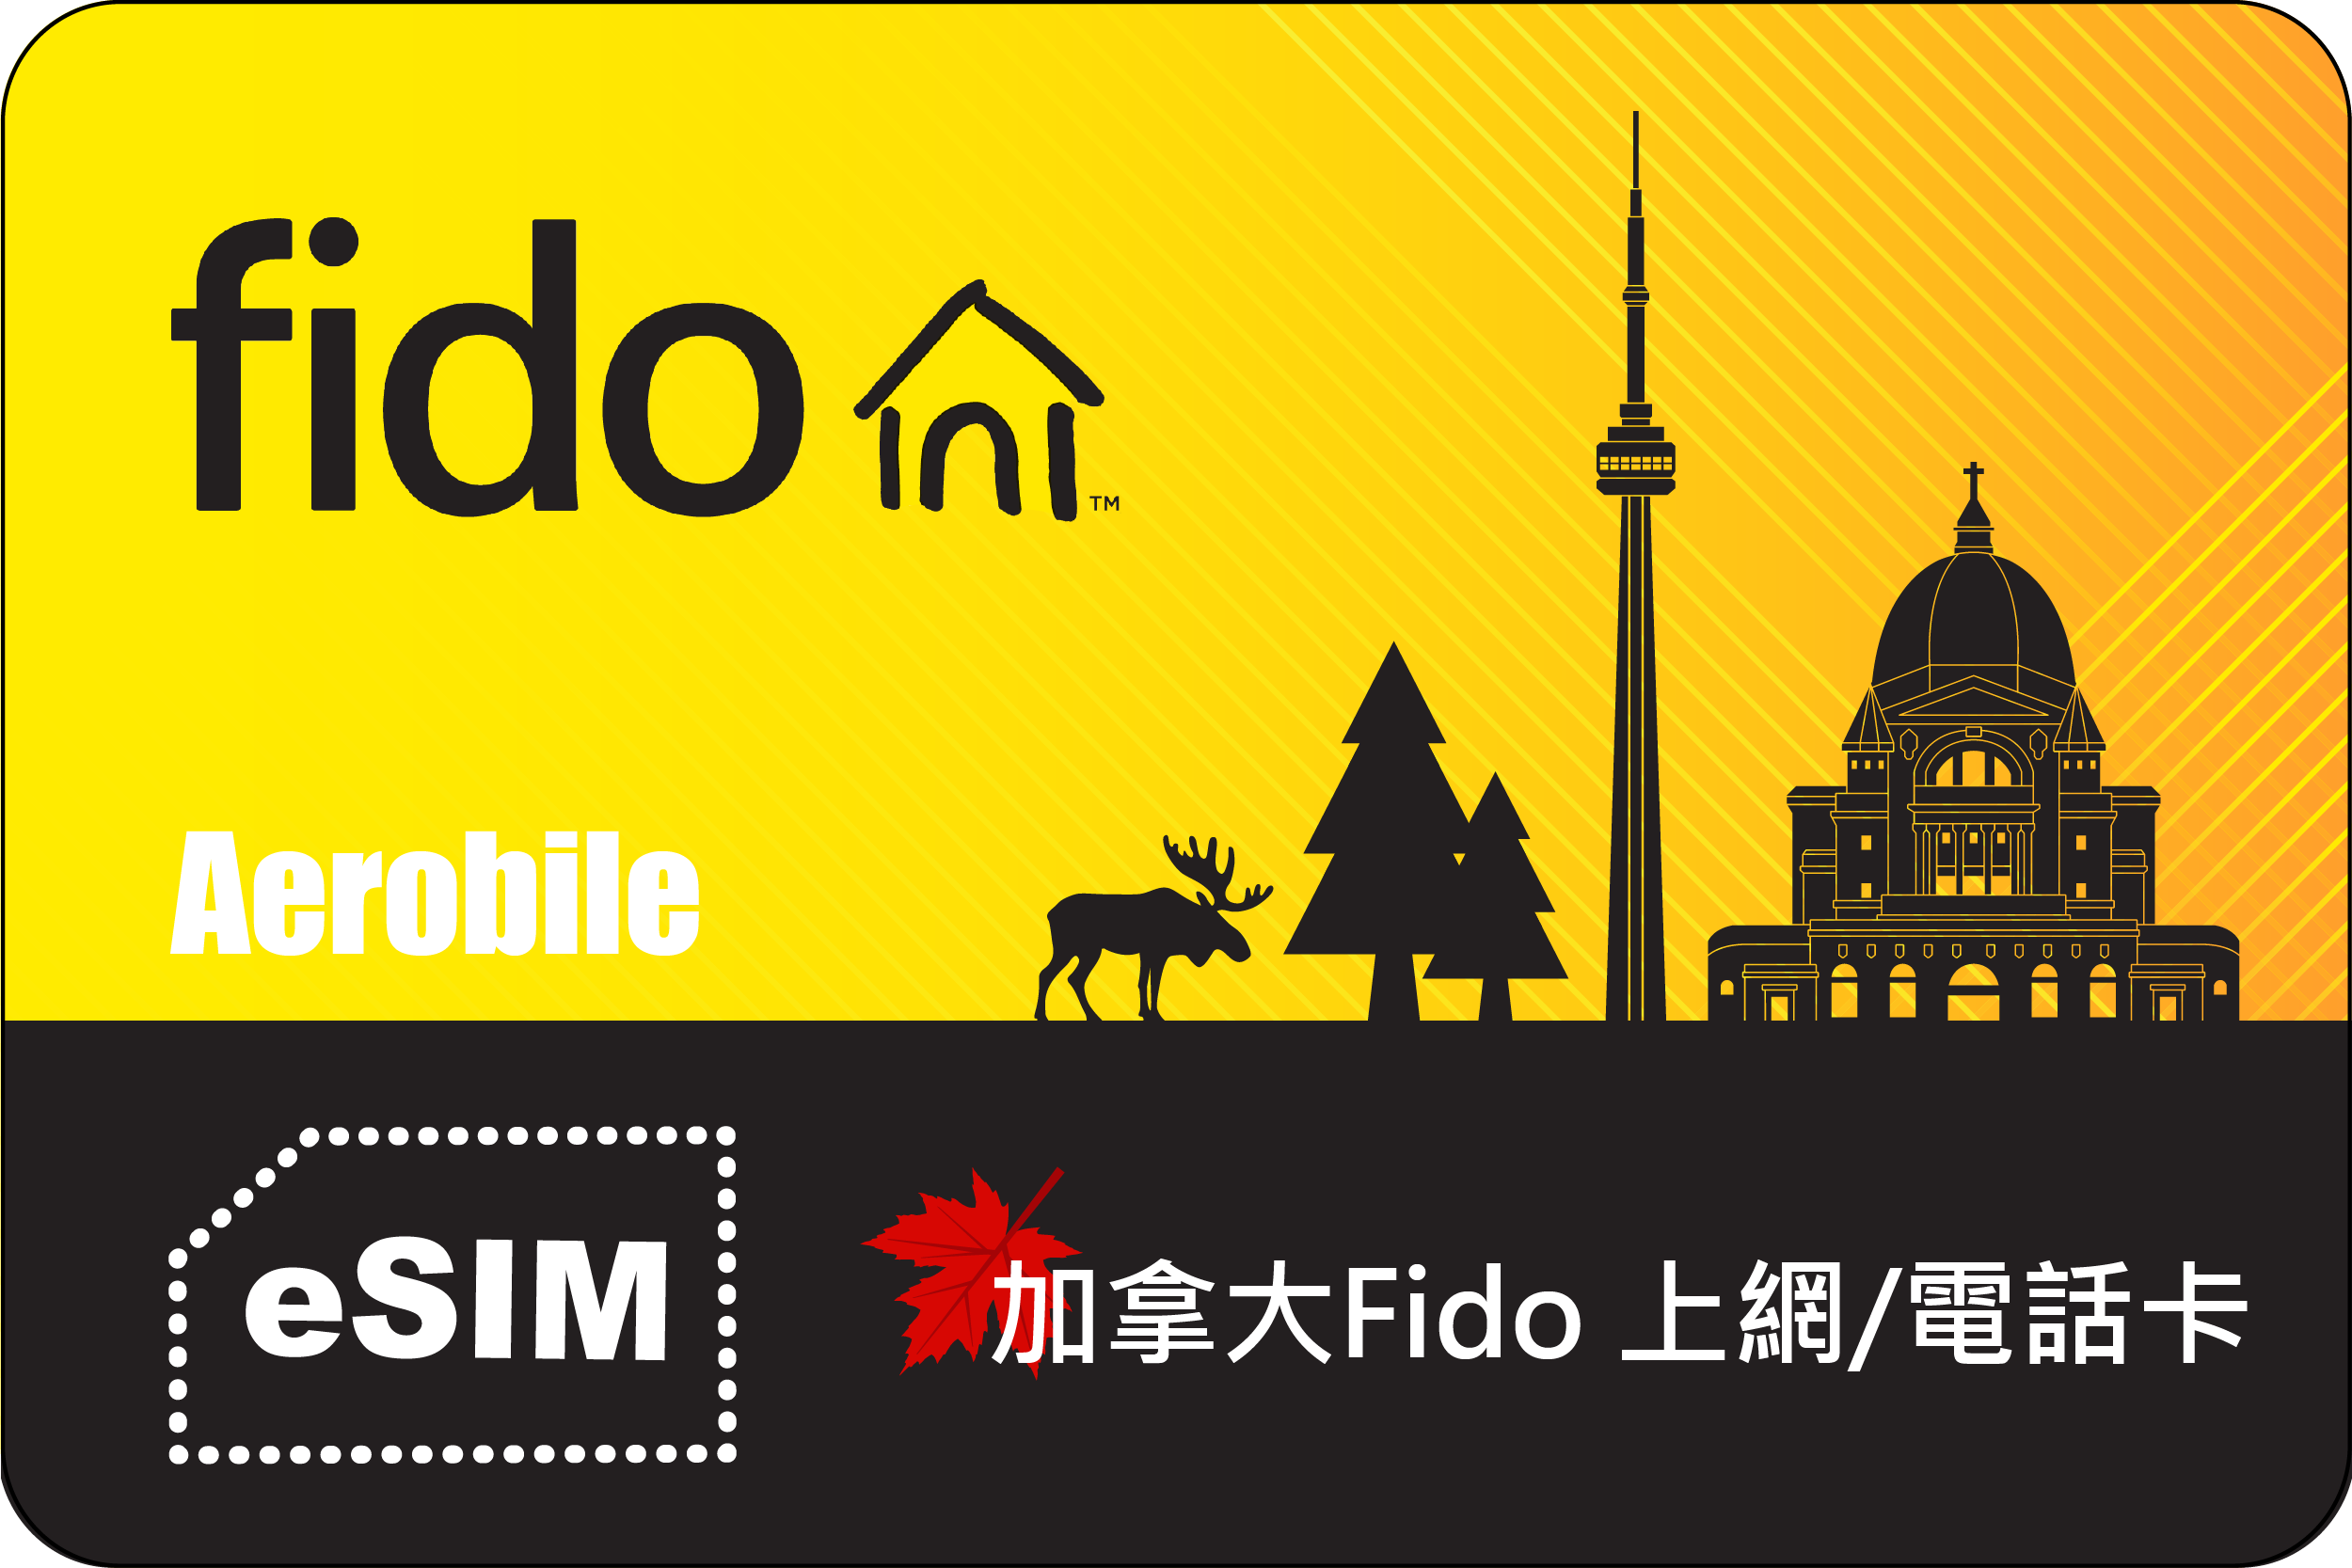 eSIM-加拿大Fido後付型,月租門號代辦-適合留學生、長期旅客